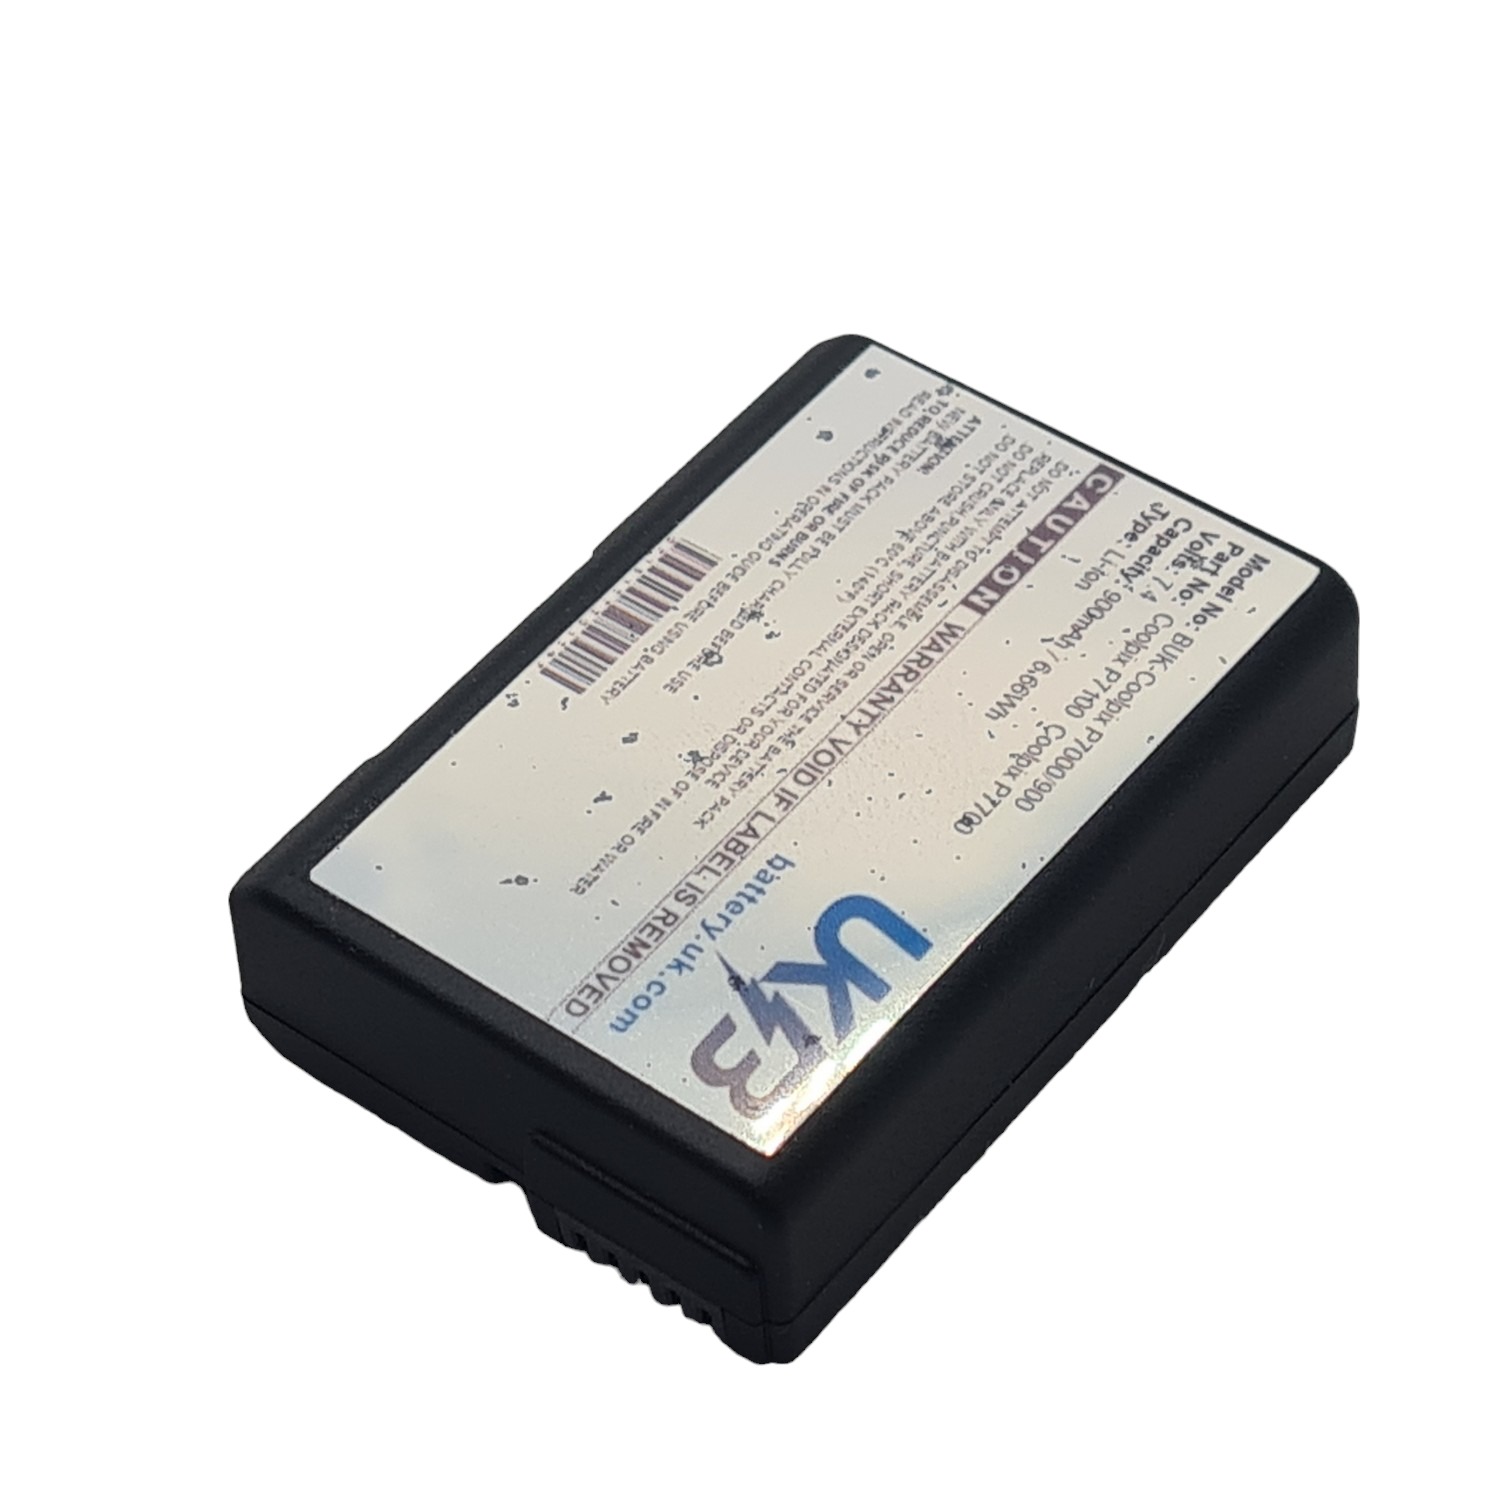 NIKON Coolpix P7100 Compatible Replacement Battery